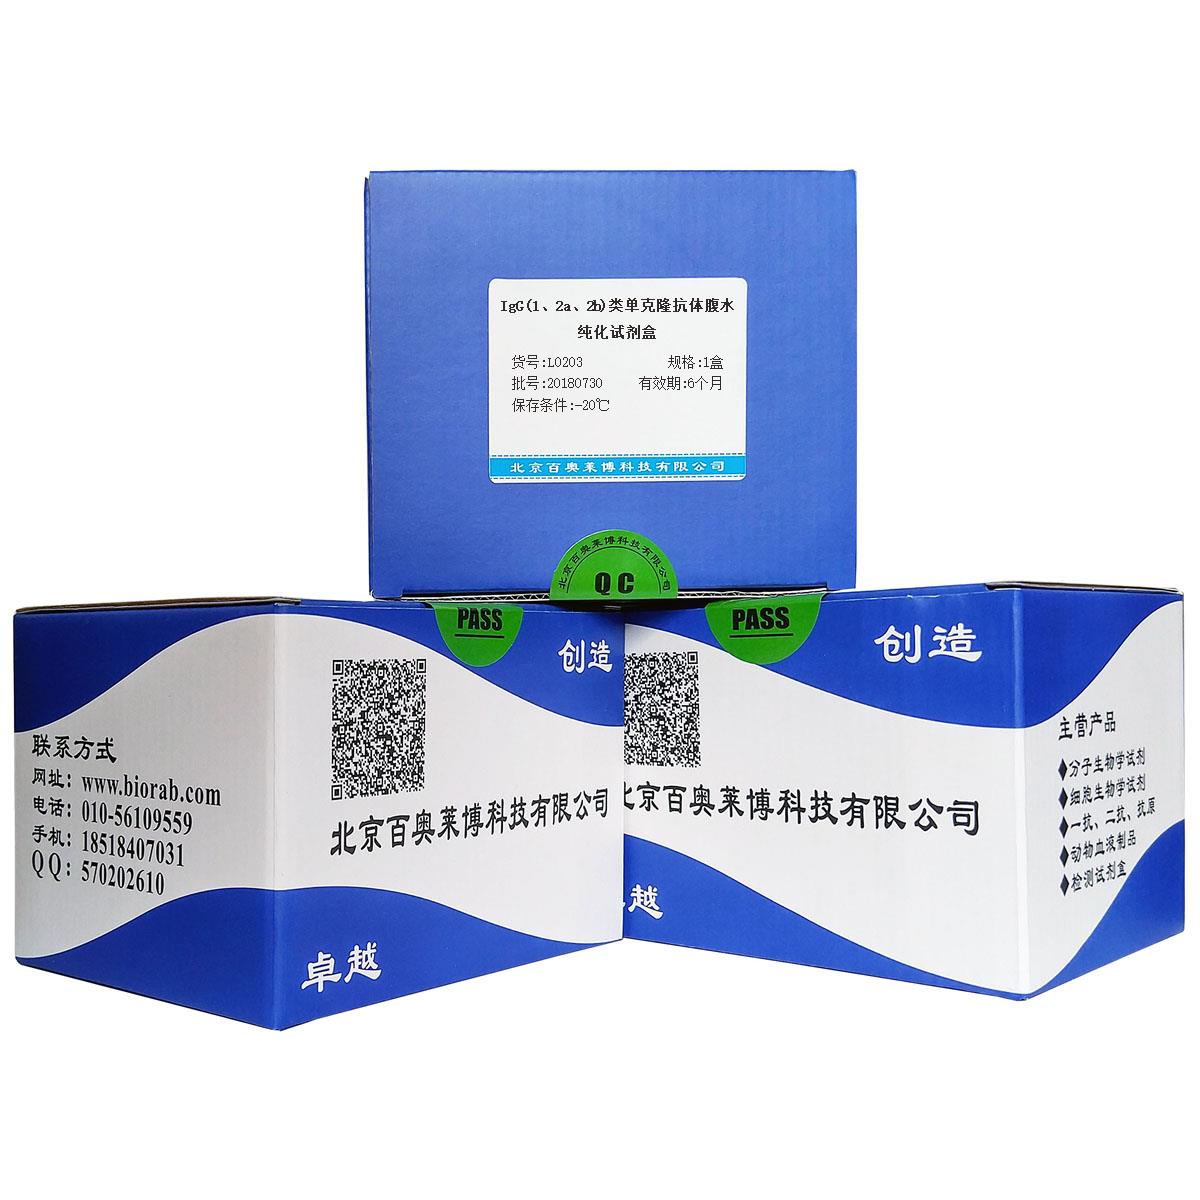 IgG(1、2a、2b)类单克隆抗体腹水纯化试剂盒